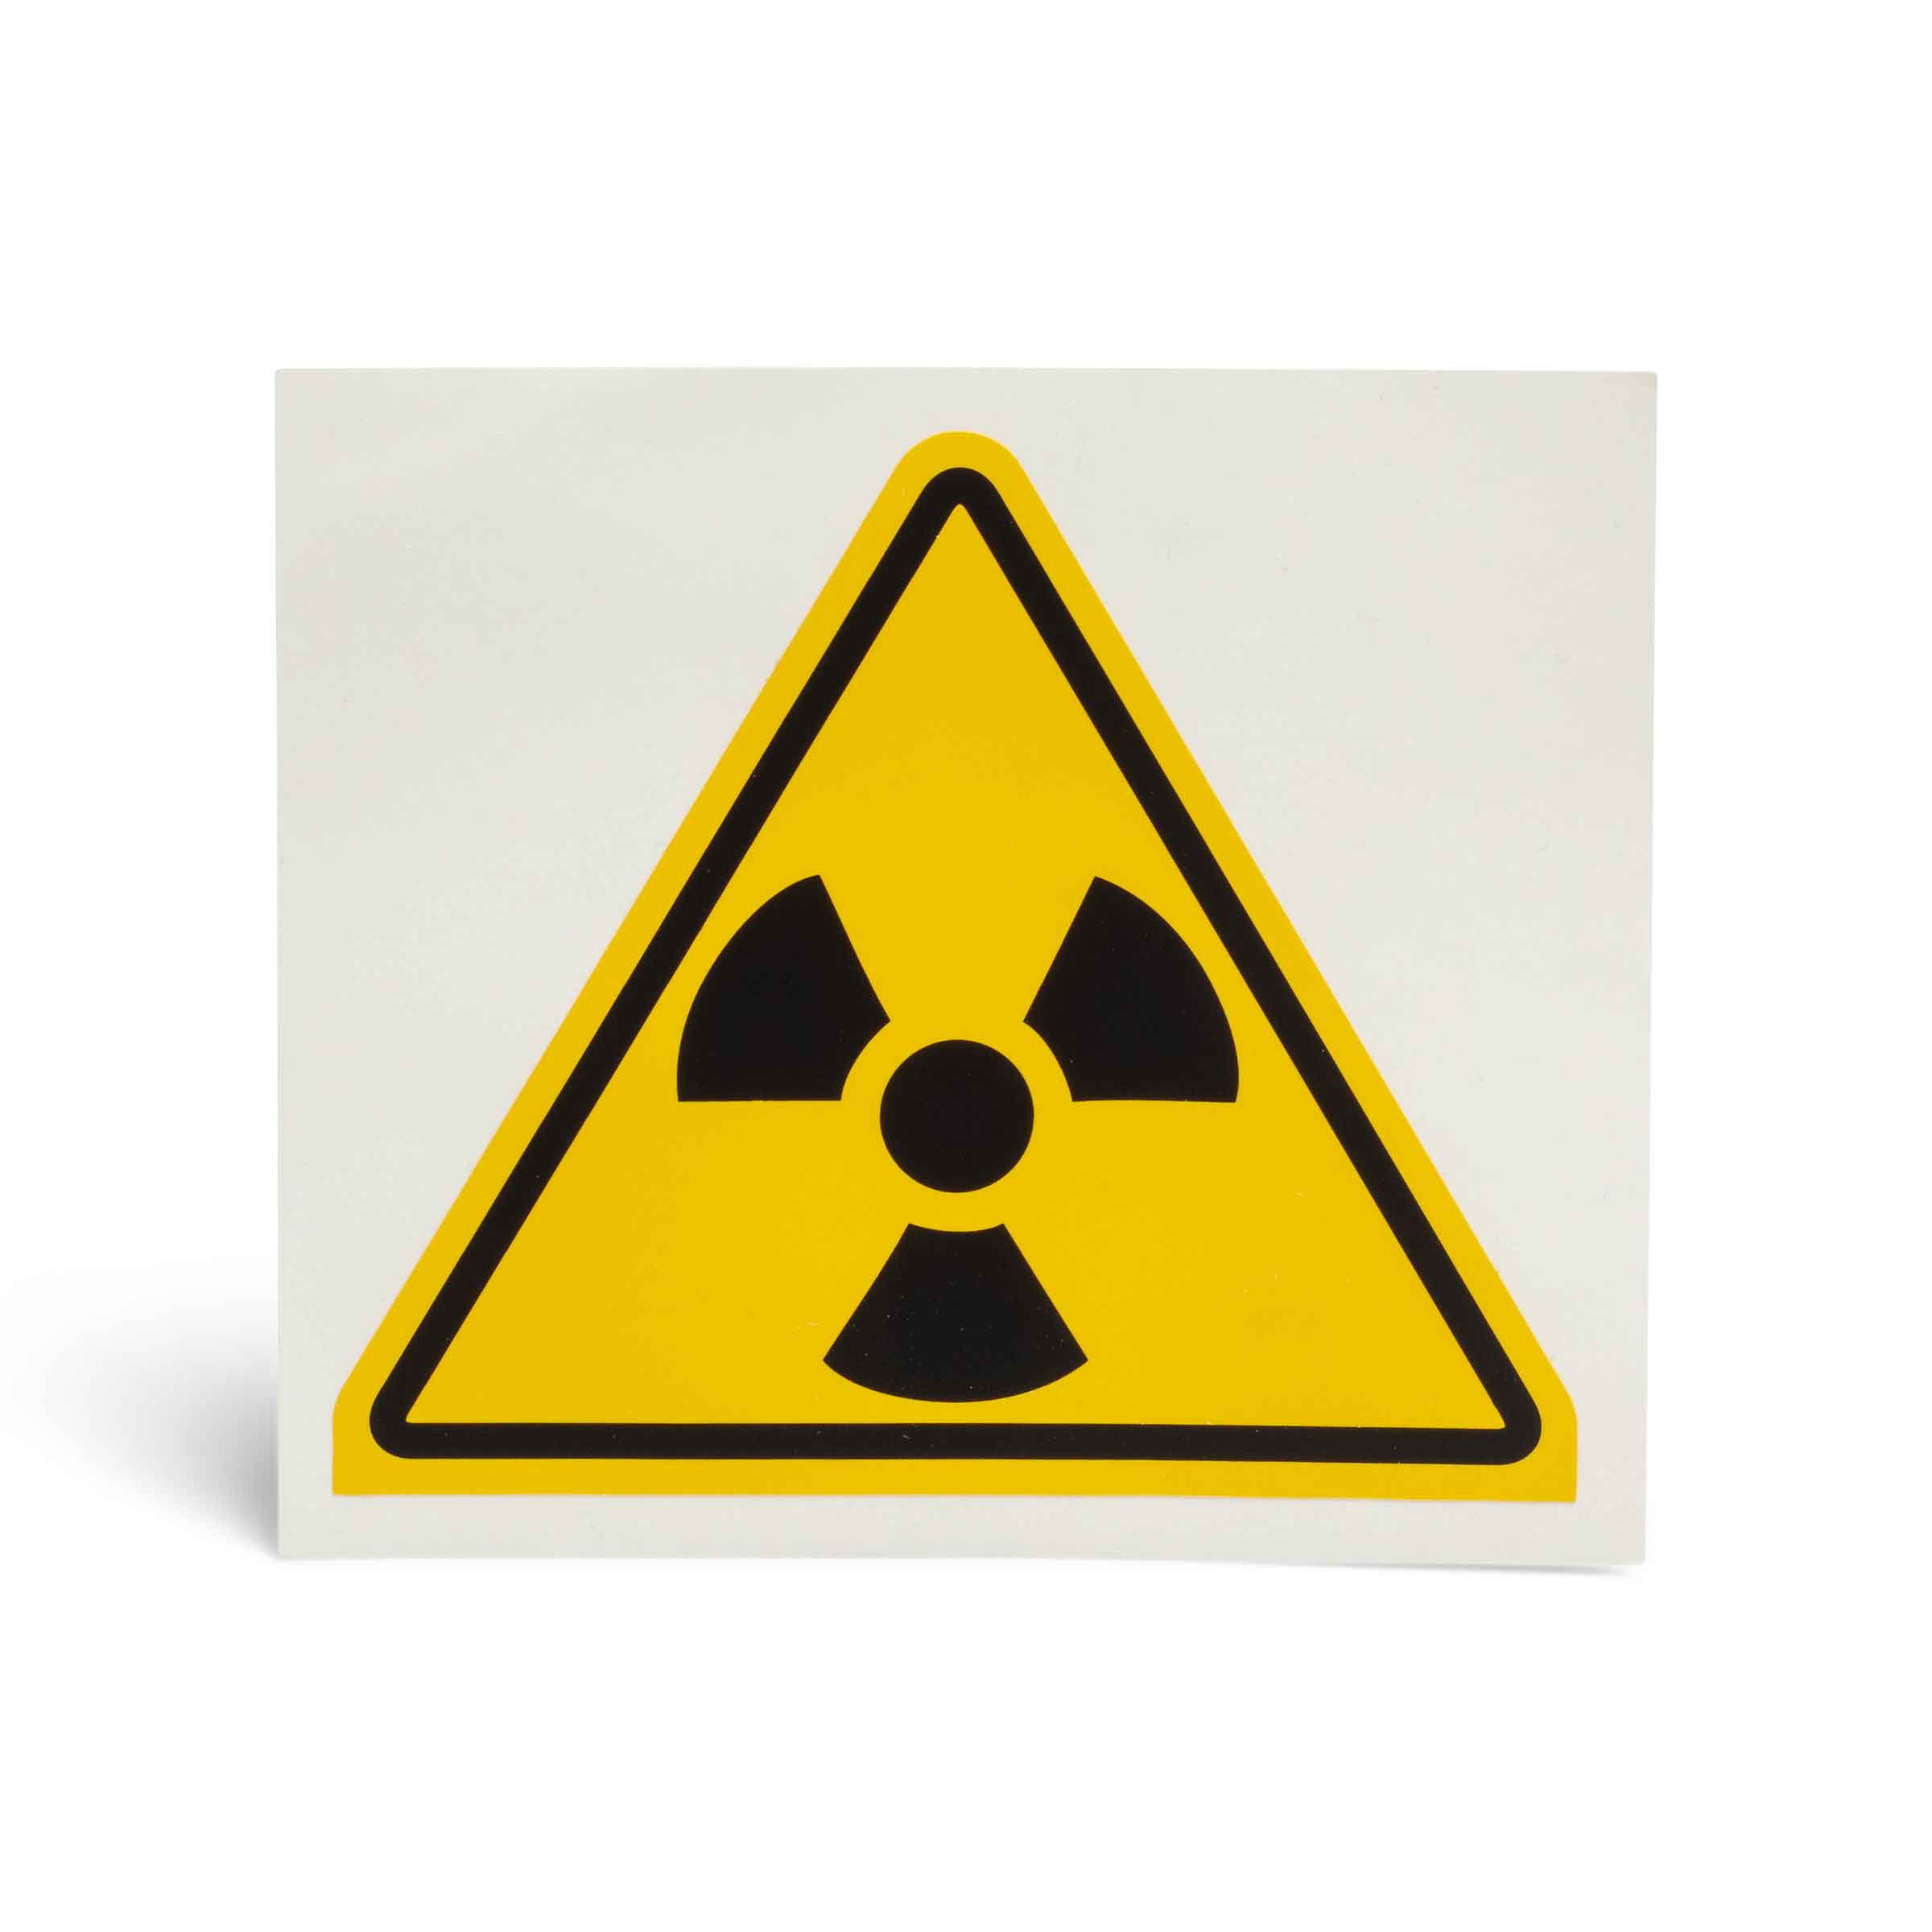 Self-adhesive warning stickers